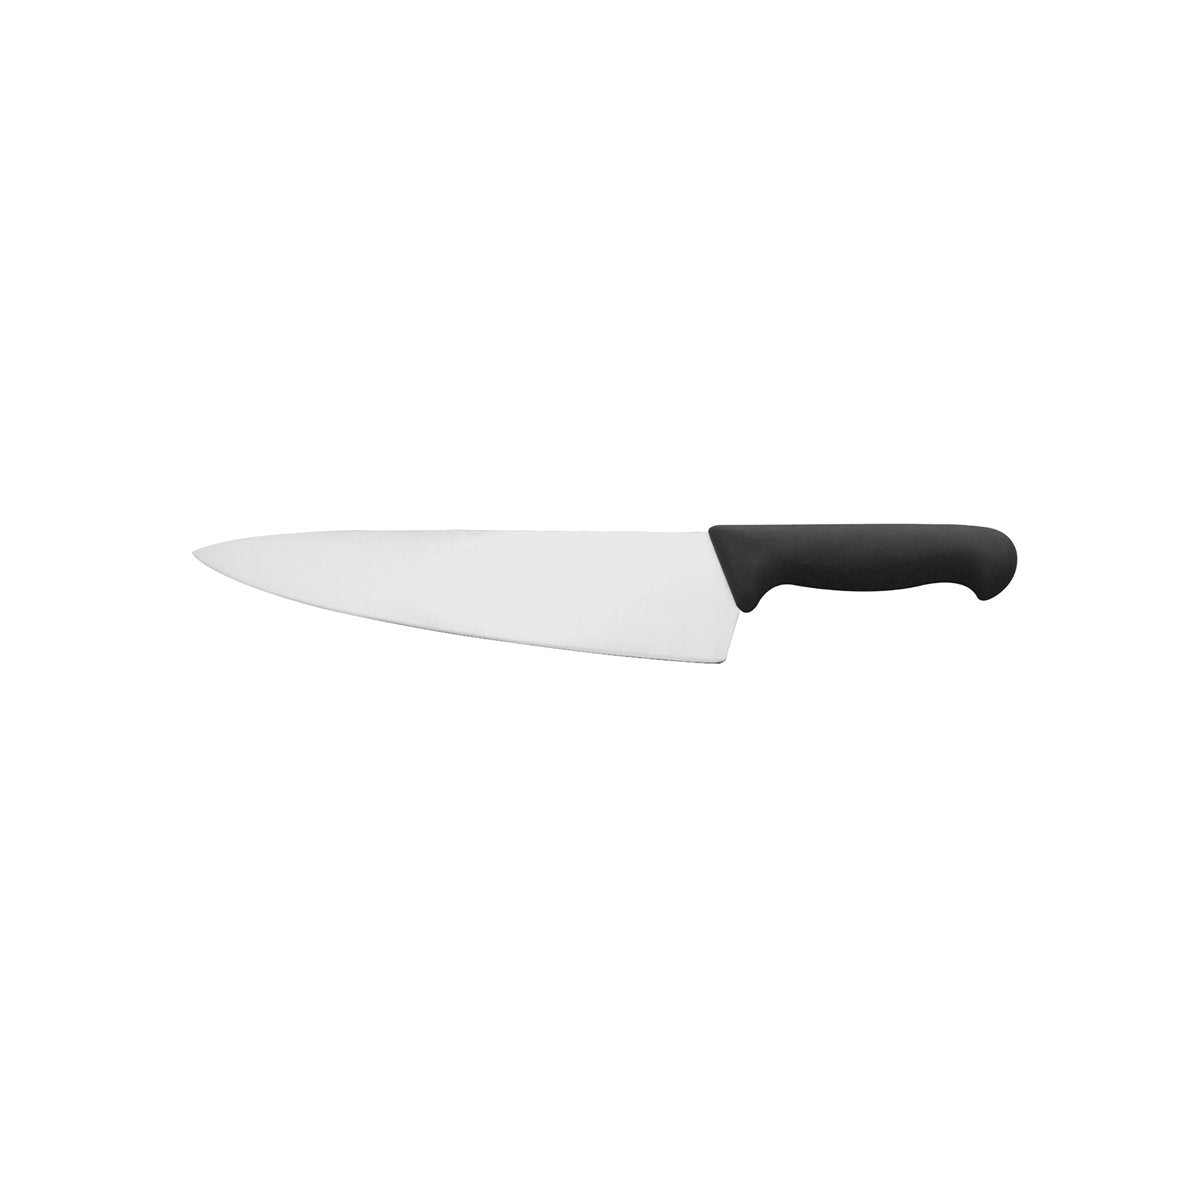 25110 Ivo Professional 55000 Chefs Knife 250mm Tomkin Australia Hospitality Supplies